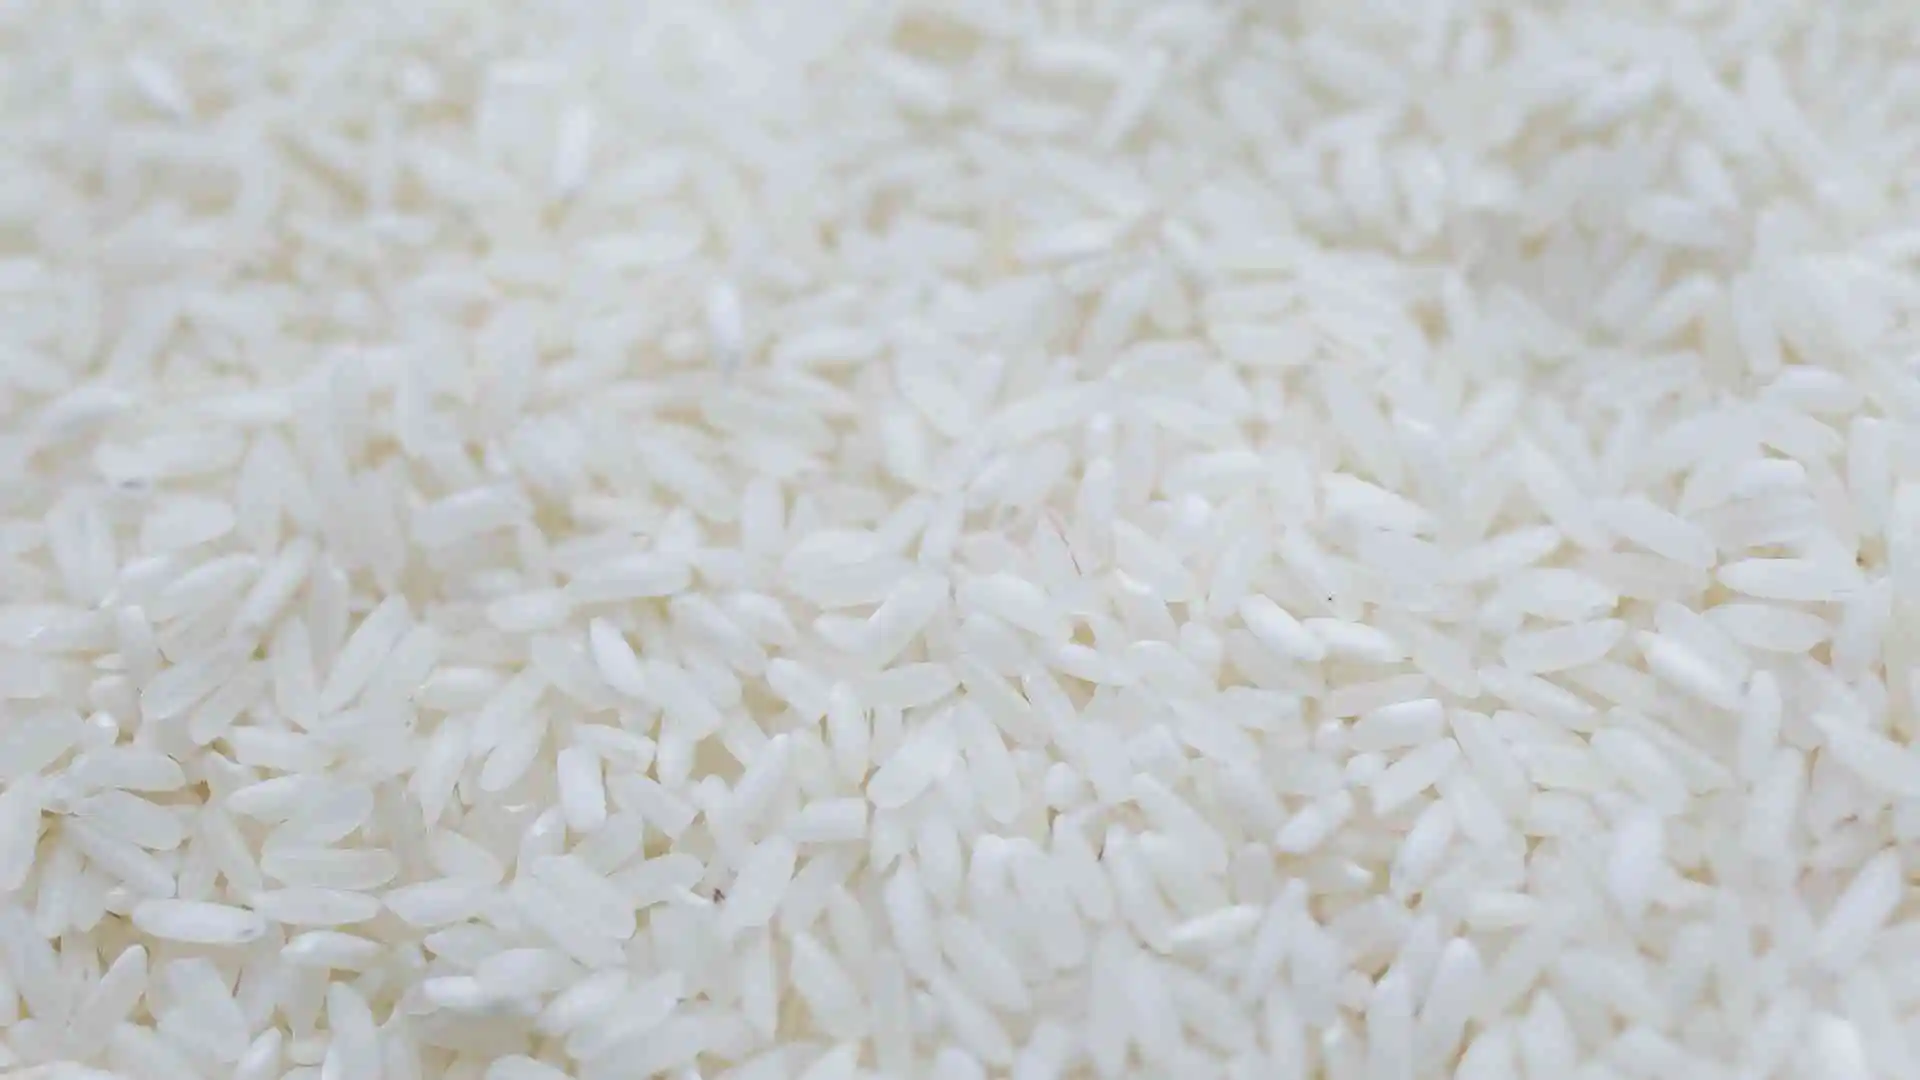 Bangladesh Rice Industry: Essential for Rural Development